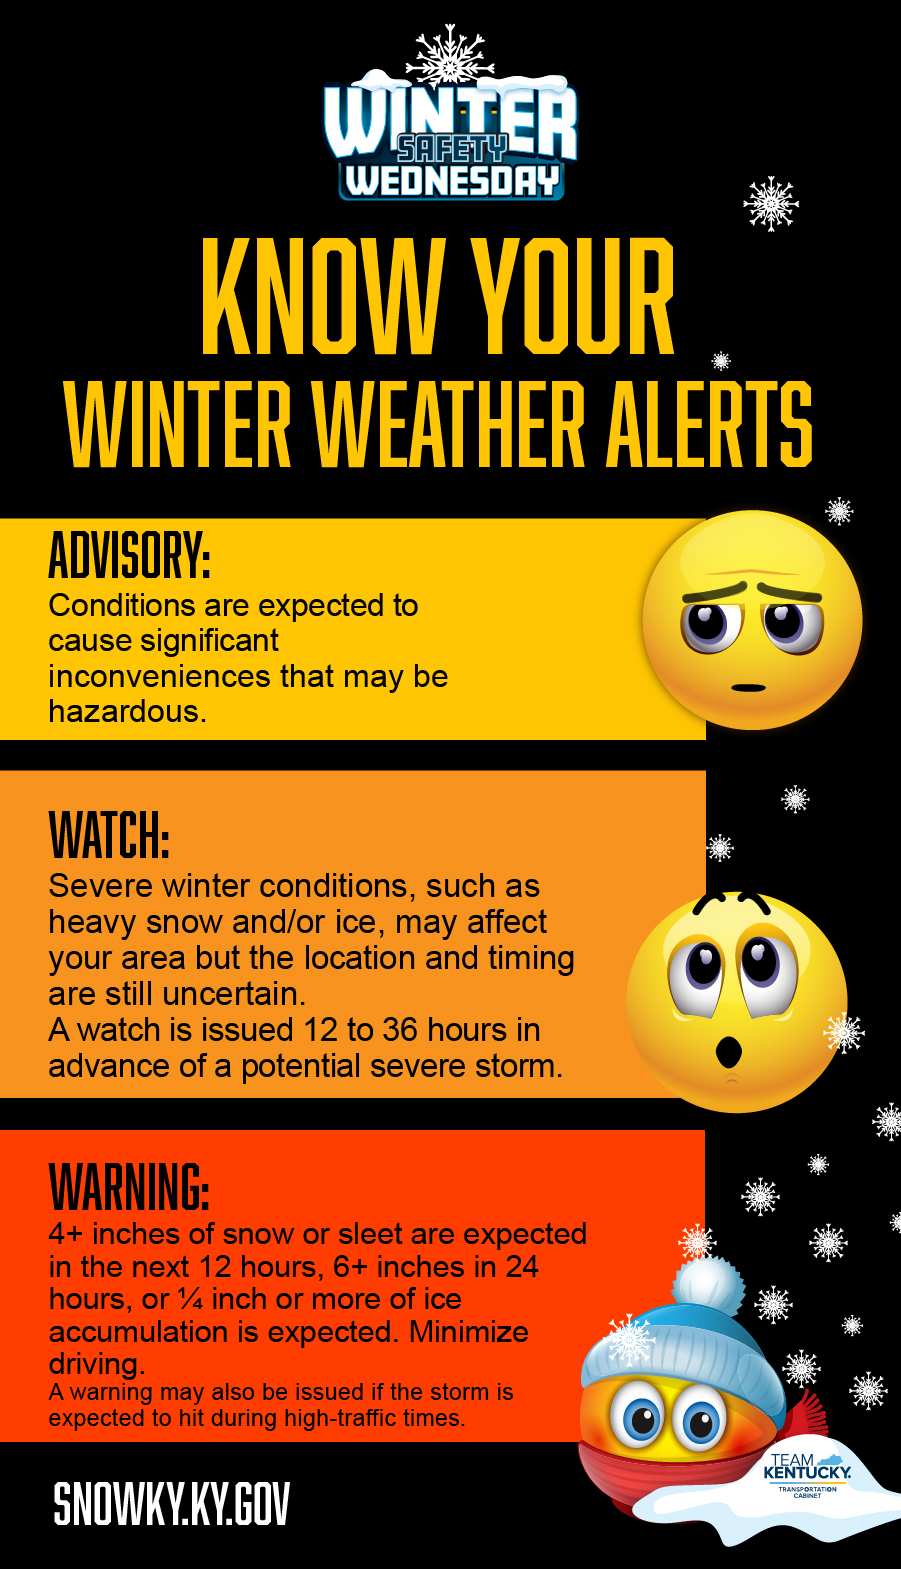 Winter weather alerts